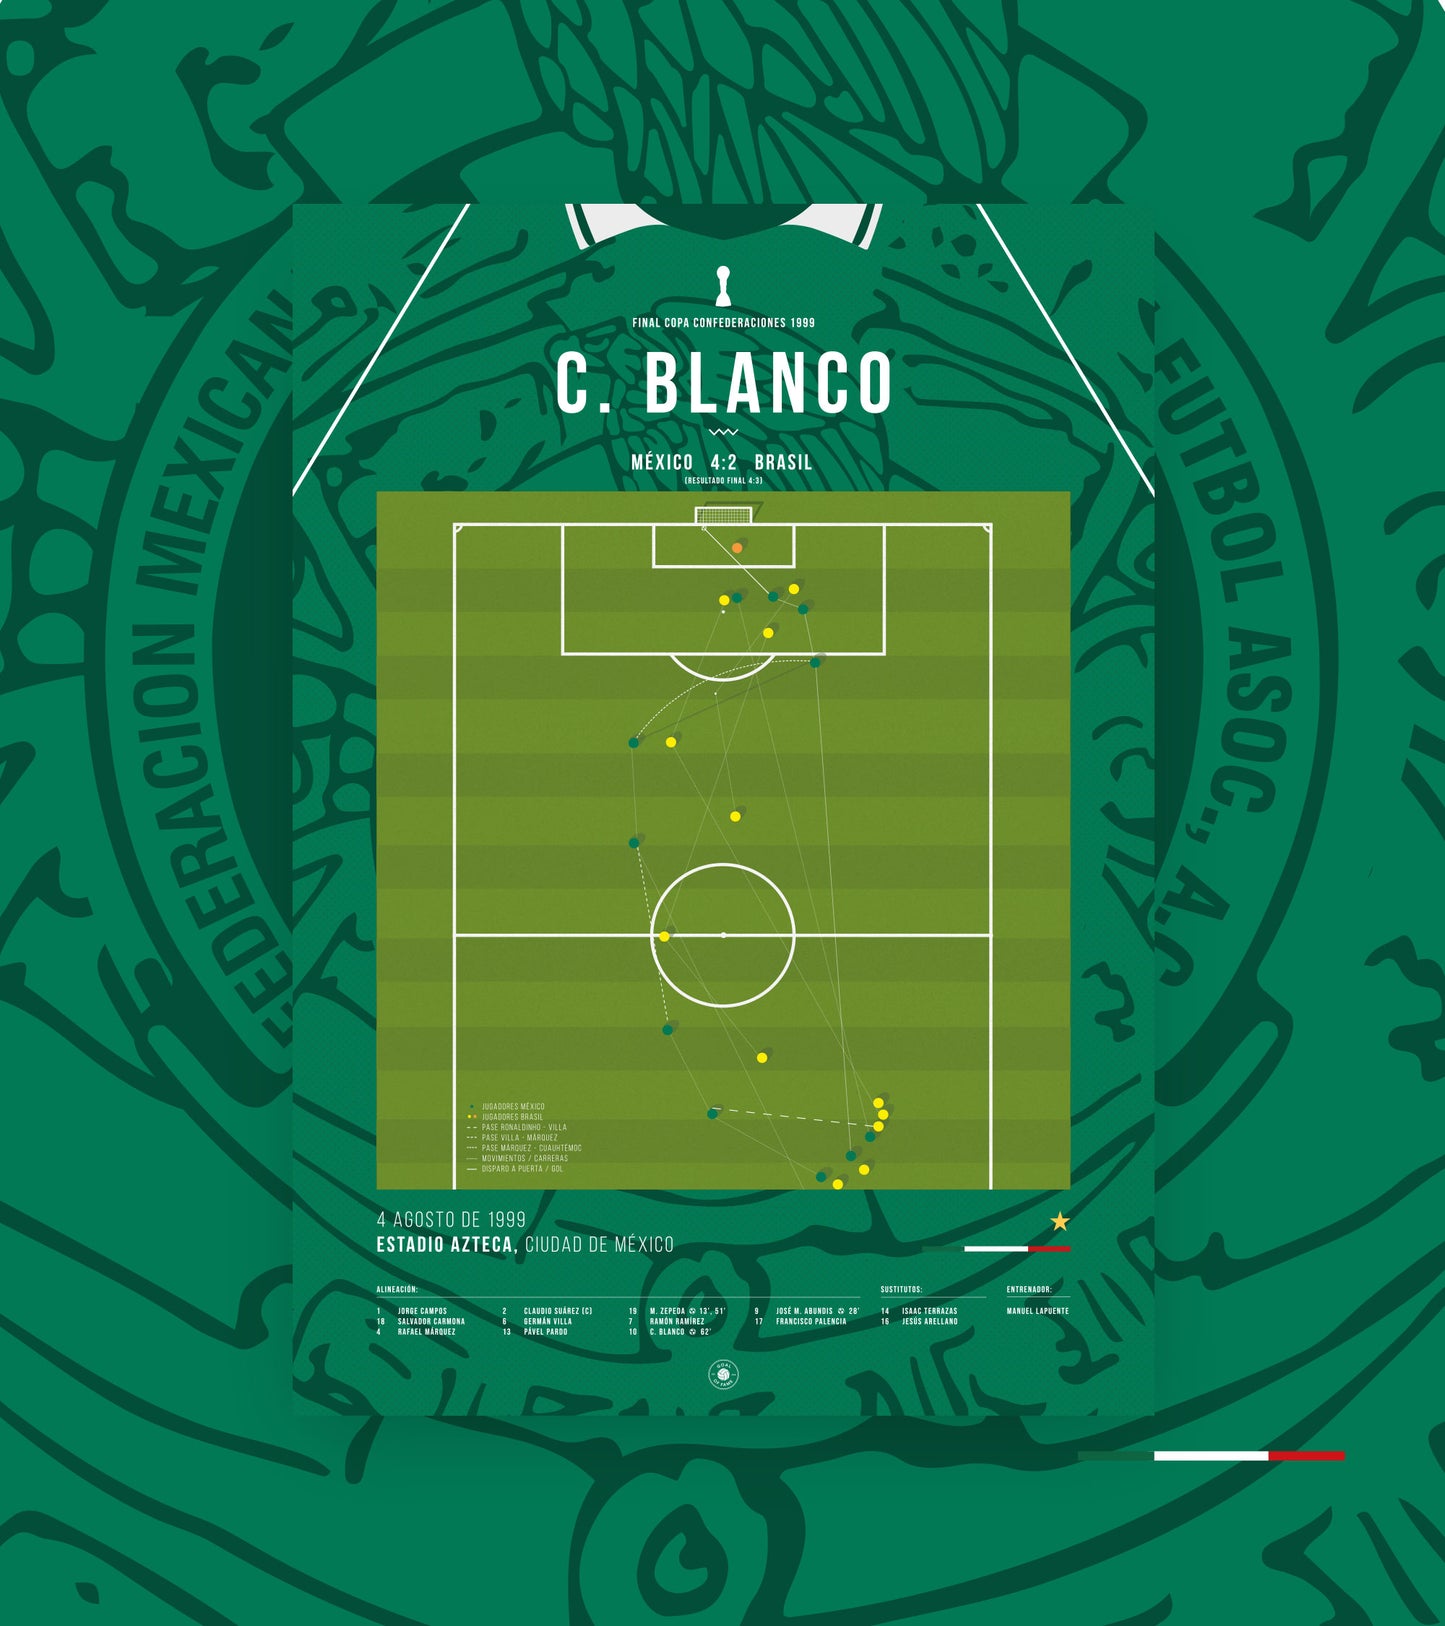 Cuauhtémoc Blanco's goal in the Confederations Cup Final vs Brazil